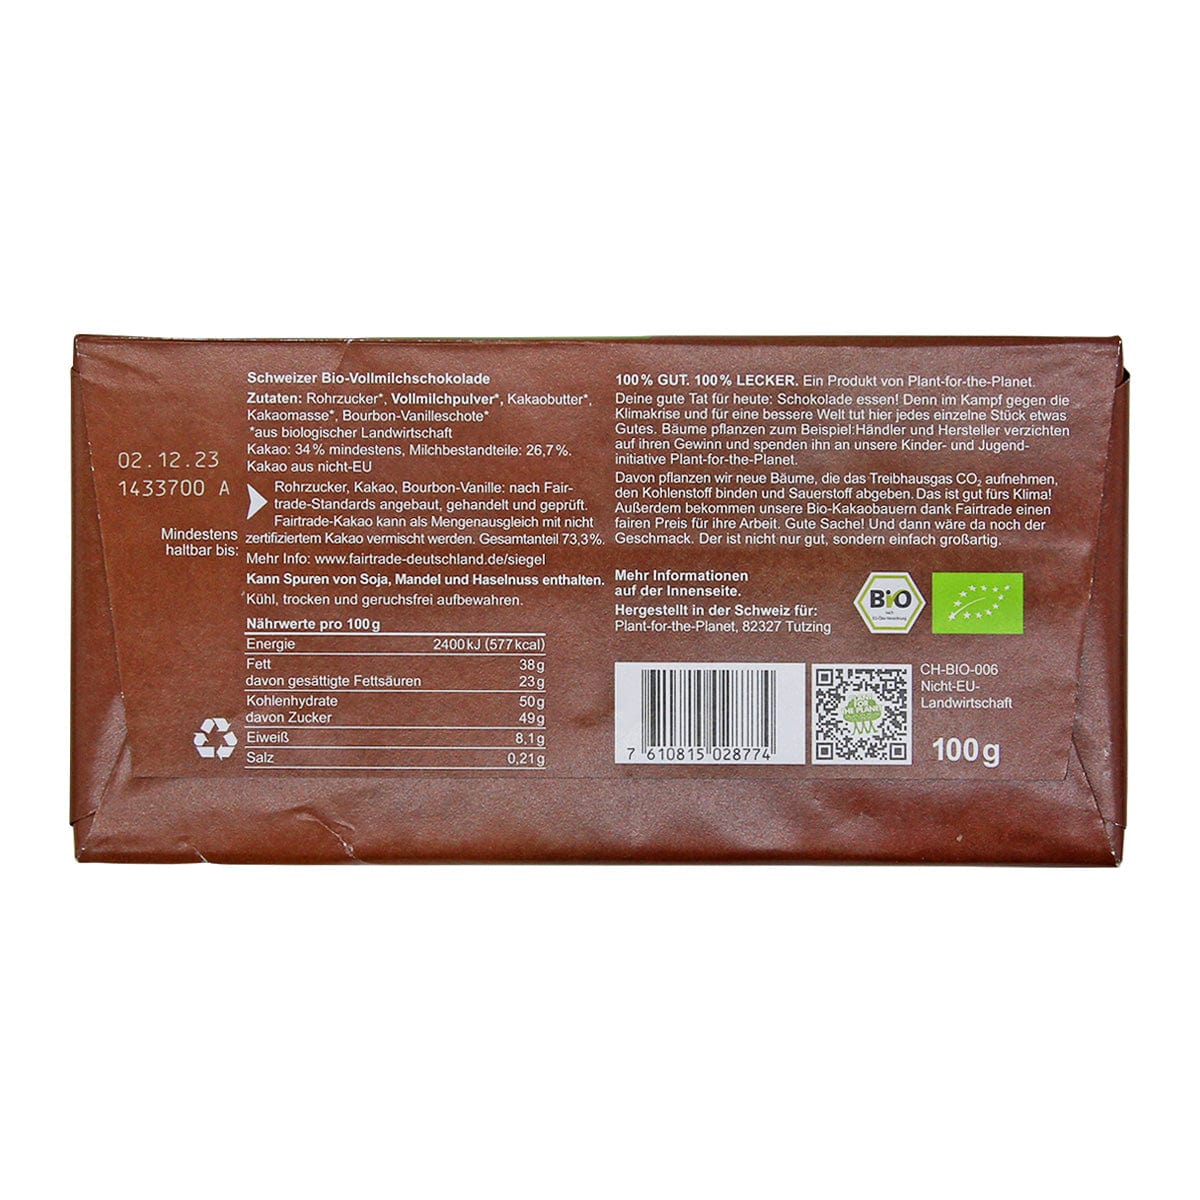 Die Gute Schokolade Bio Schokolade, 100g